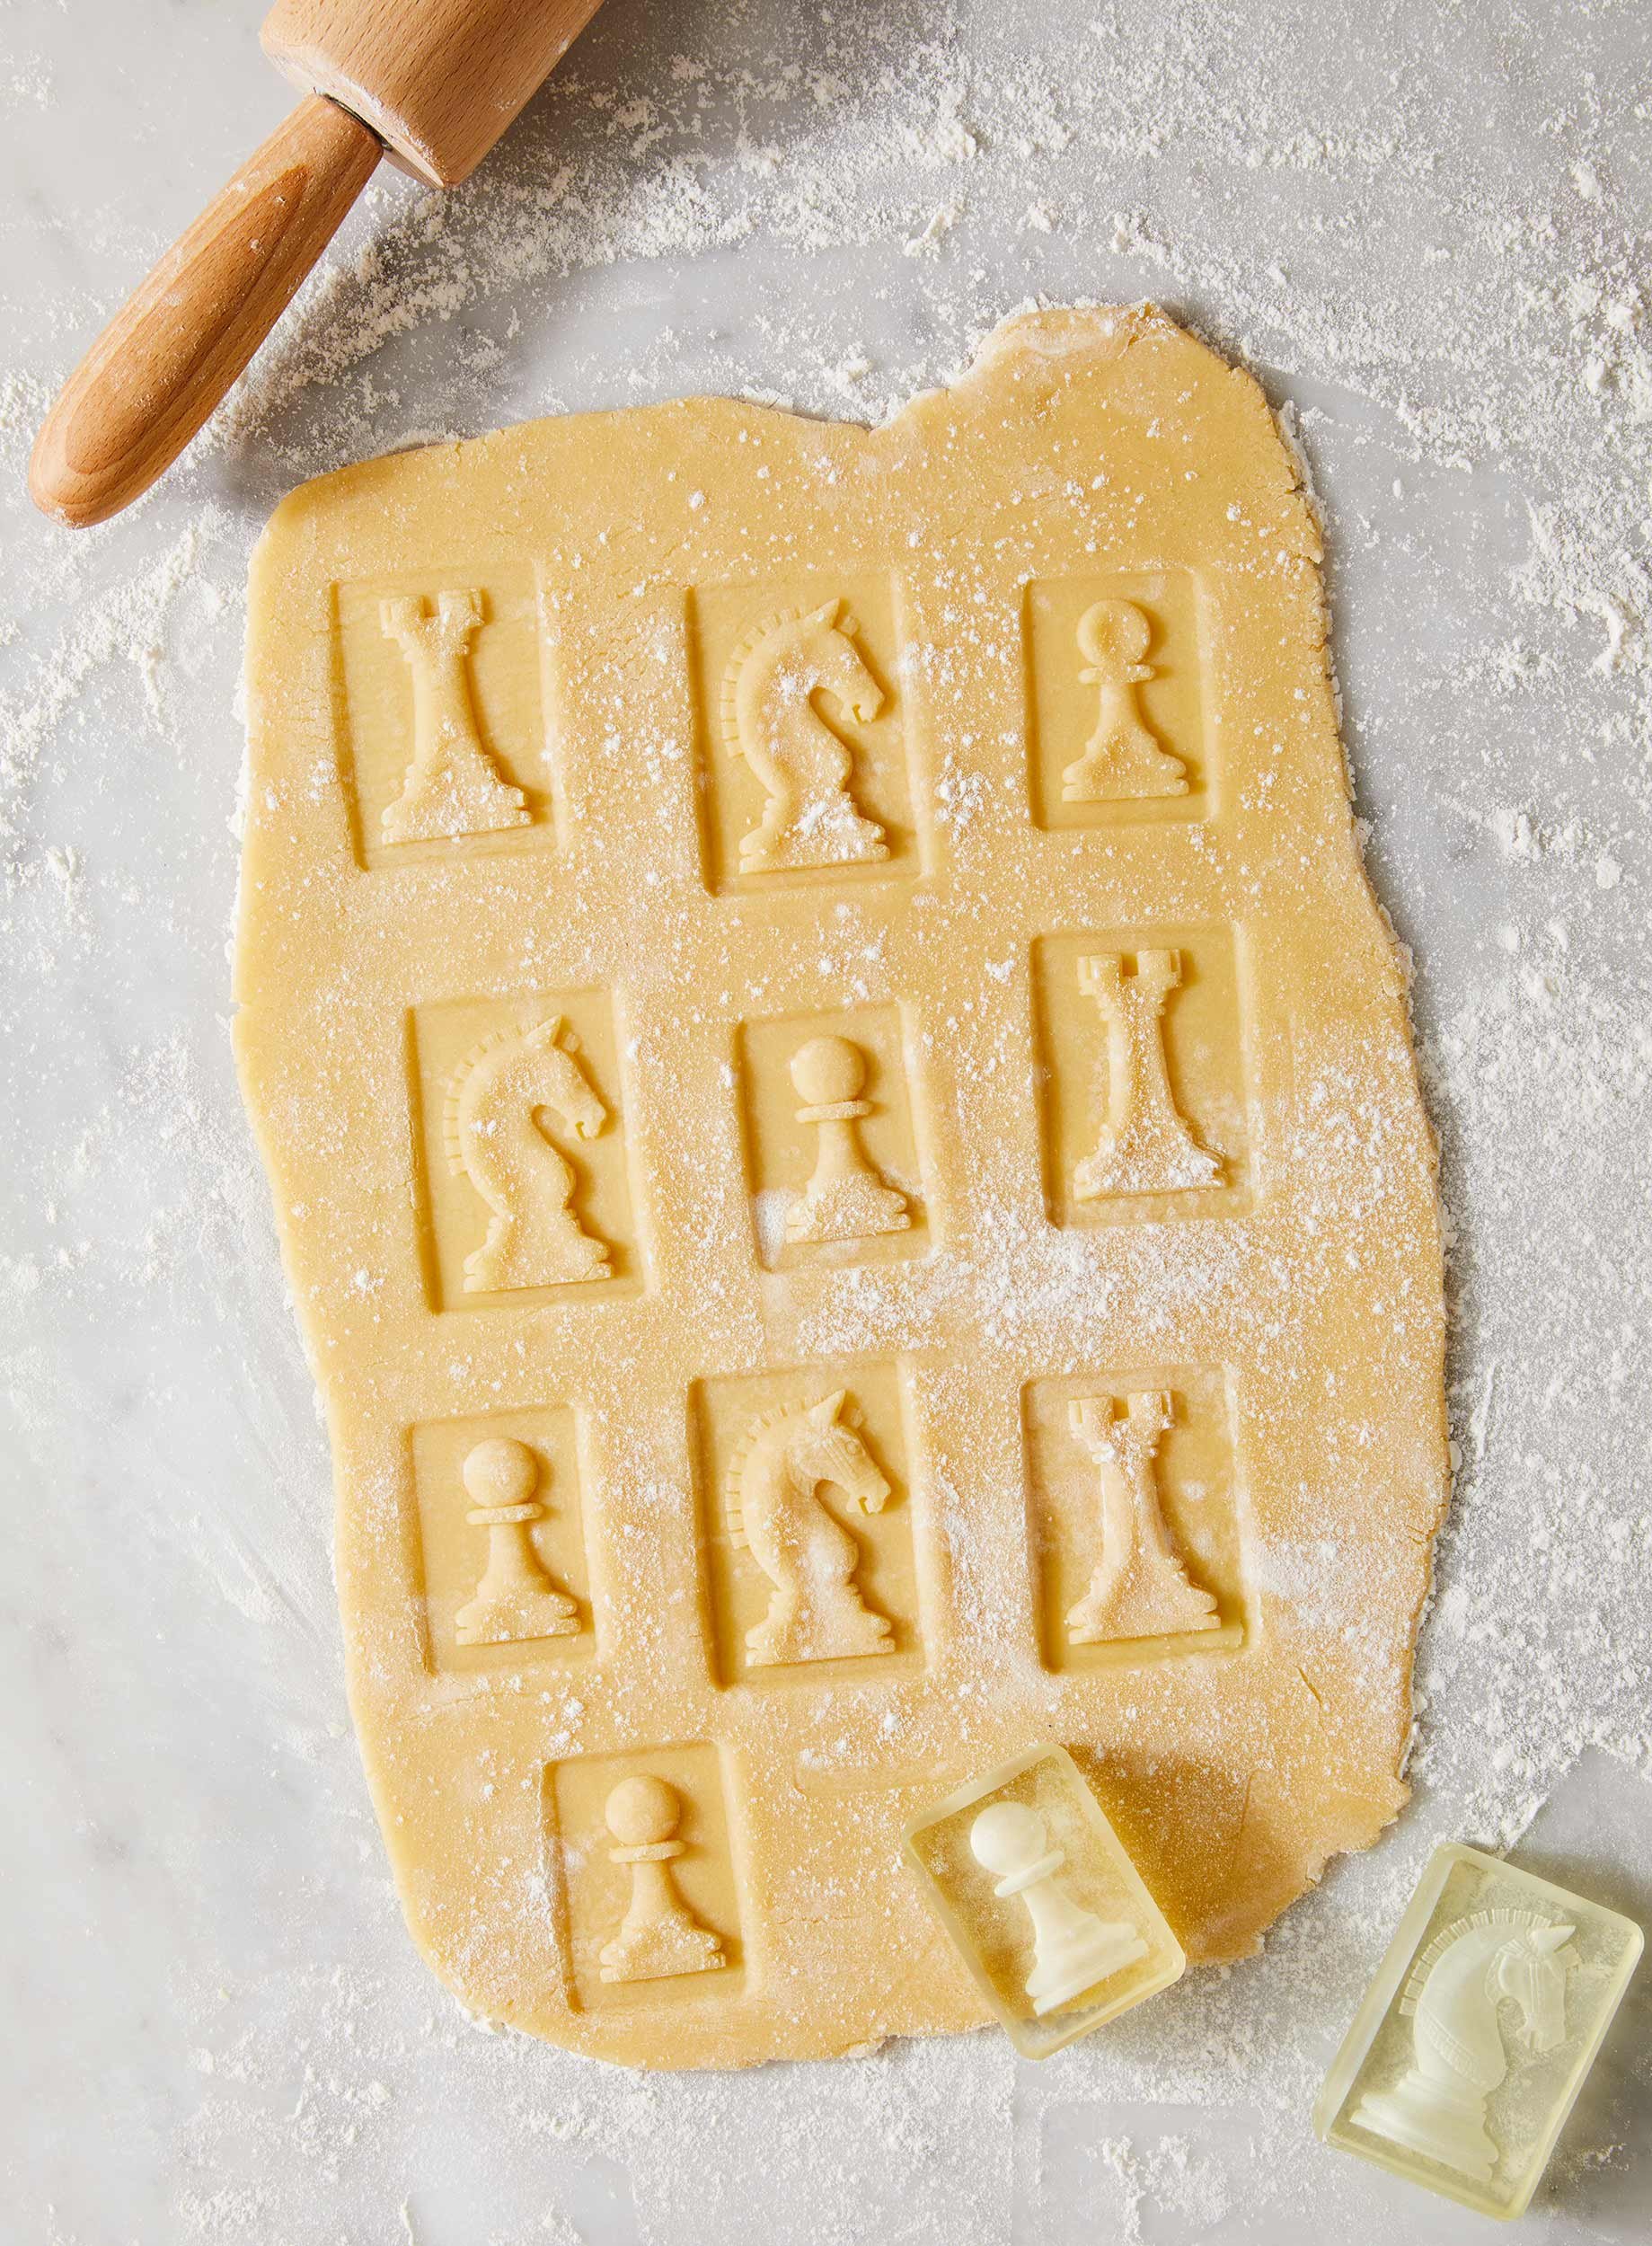 nyc-nj-food-editorial-photographer-chessman-cookies.jpg